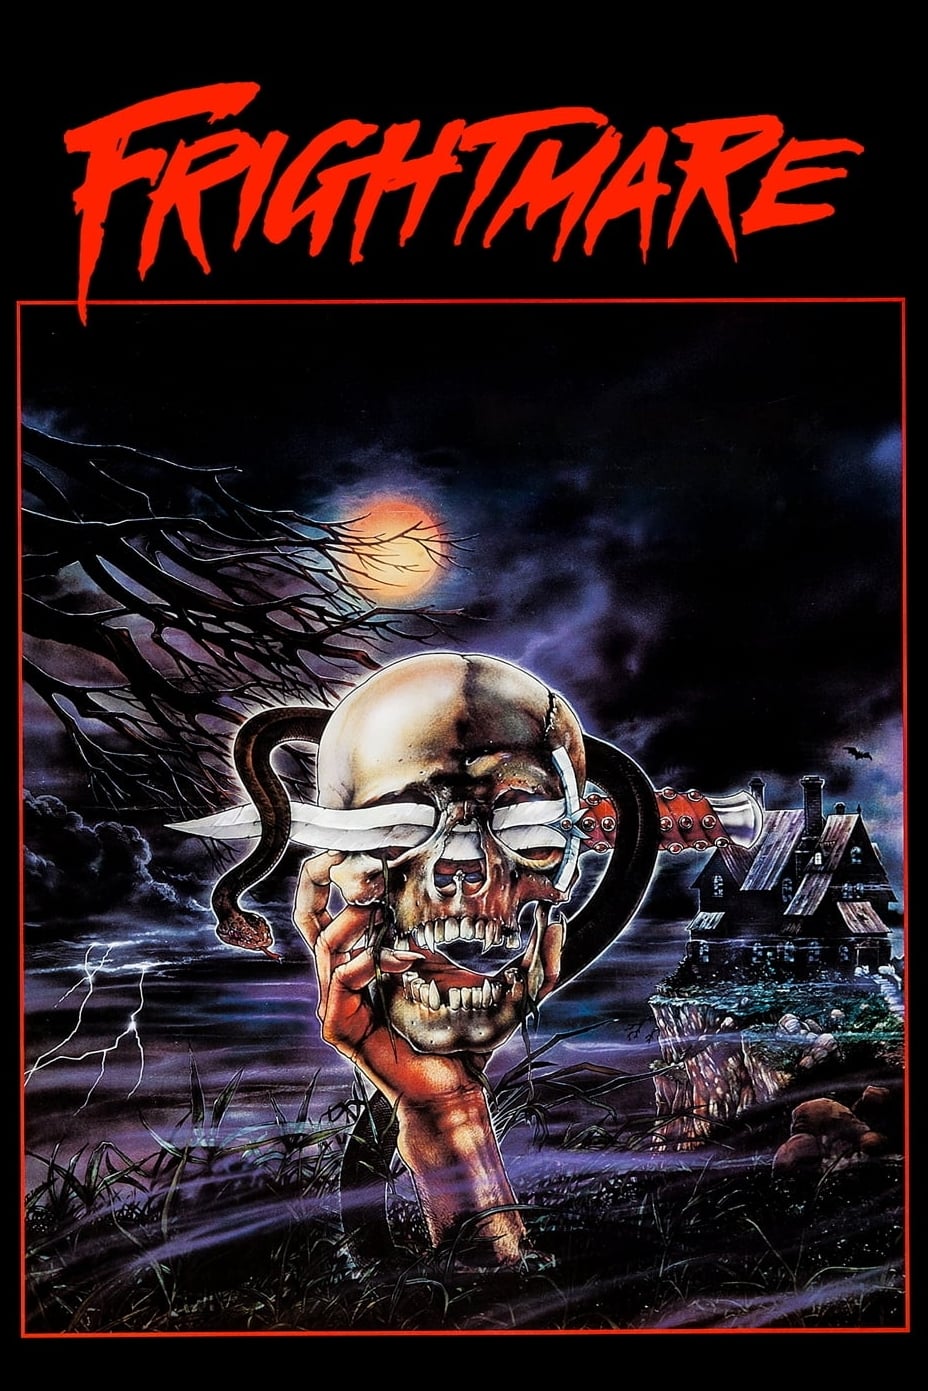 Frightmare (1981)